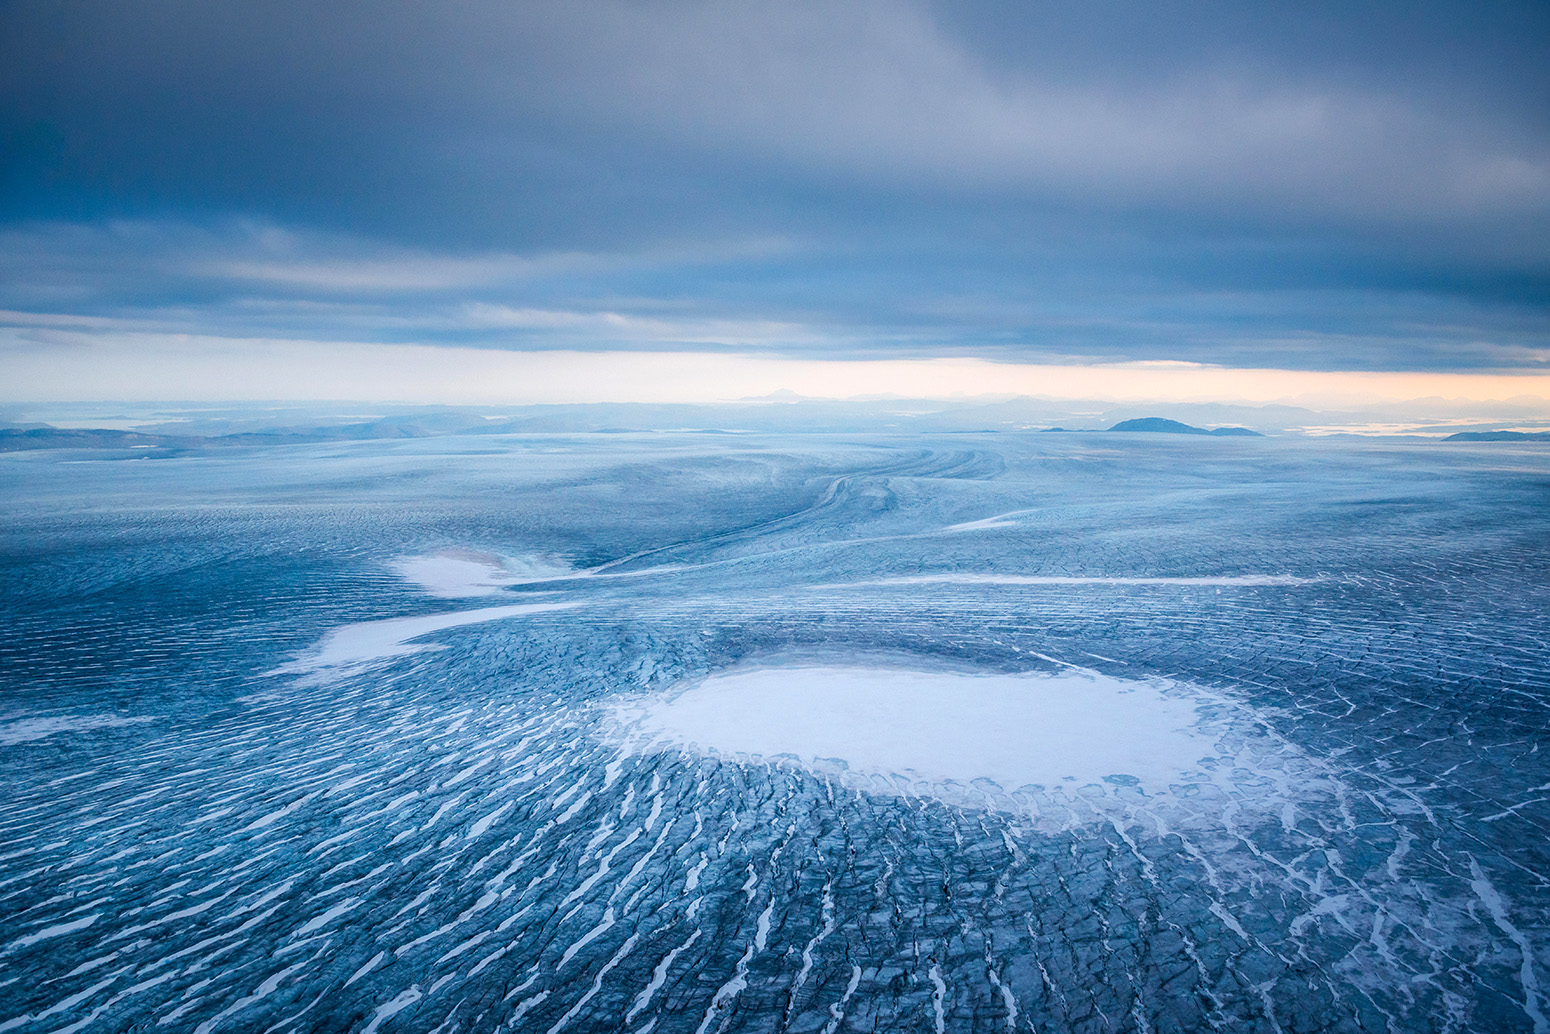 Aerial view of the Greenland ice sheet. Credit: imageBROKER / Alamy Stock Photo. KXAJ2W